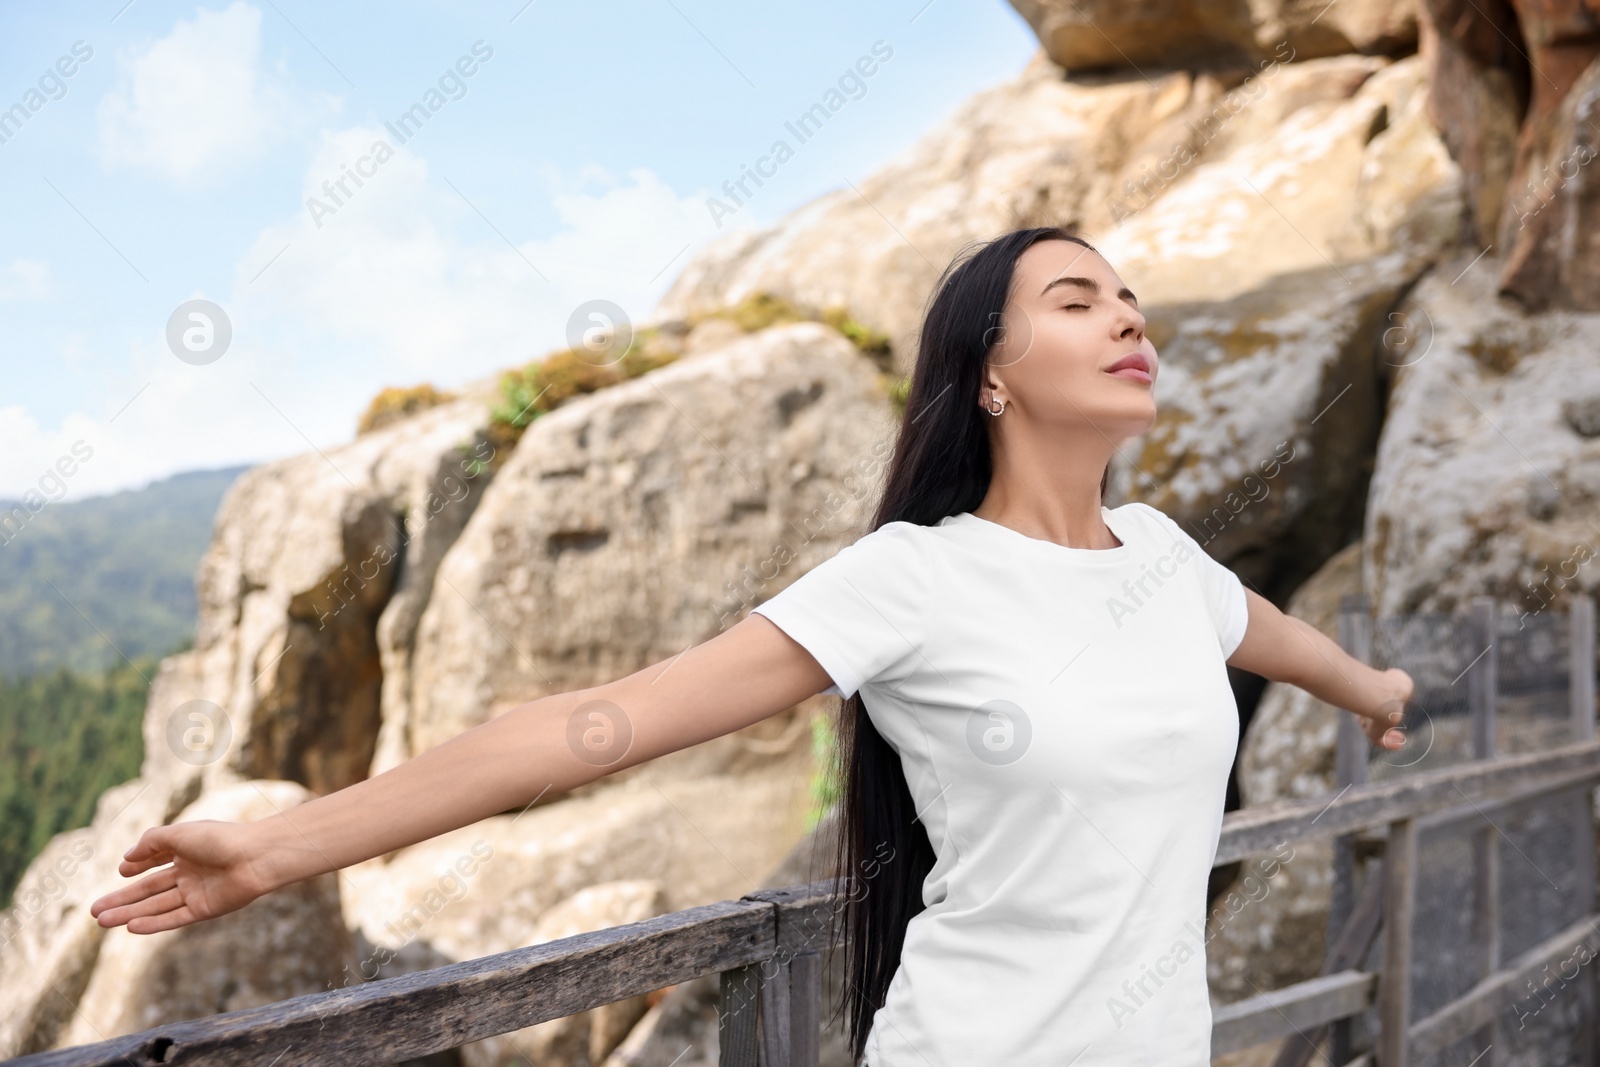 Photo of Feeling freedom. Beautiful woman enjoying nature near wooden railing in mountains